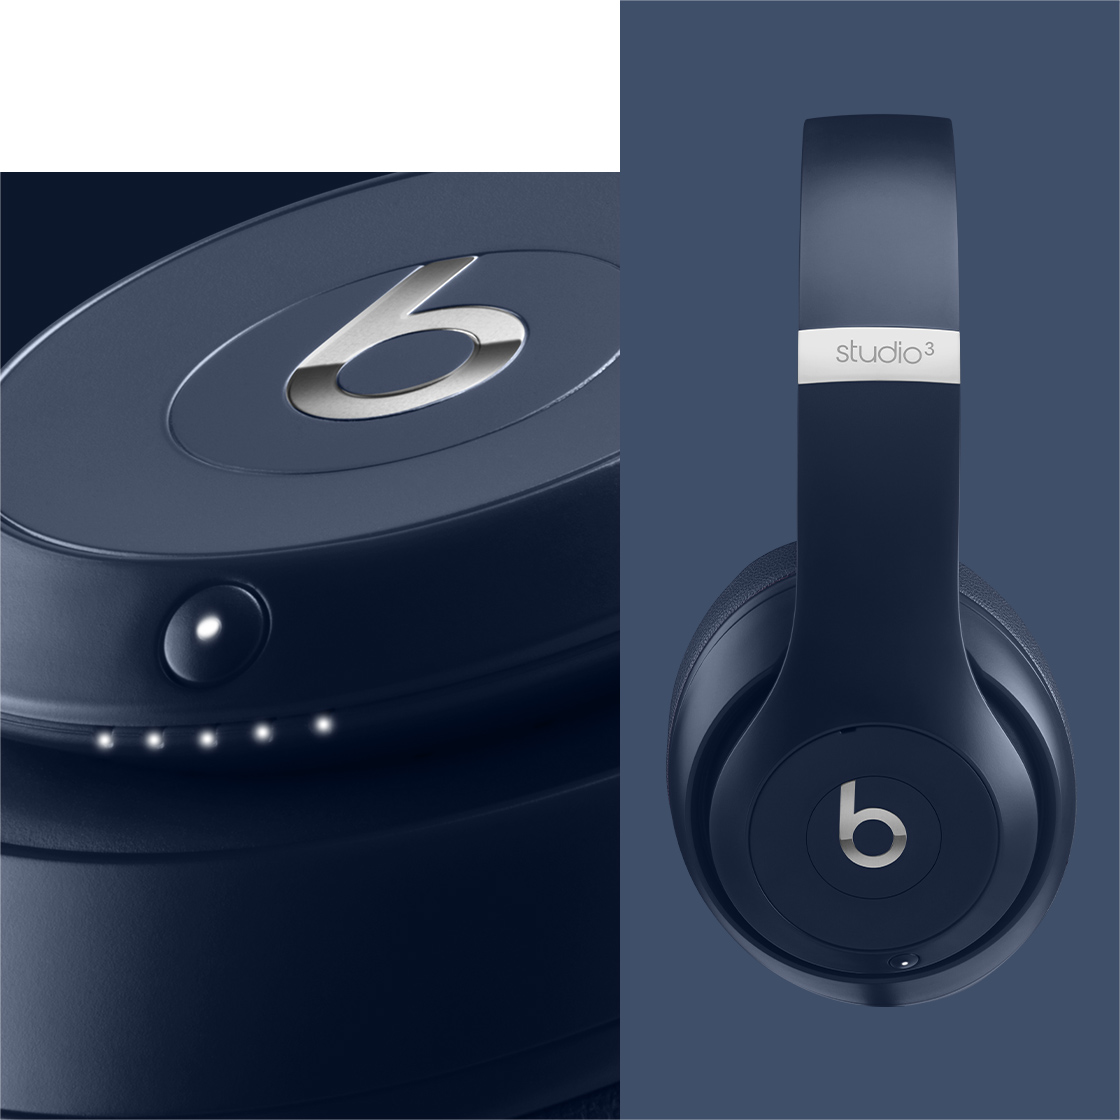 Studio Wireless Headphones Support - Beats by Dre